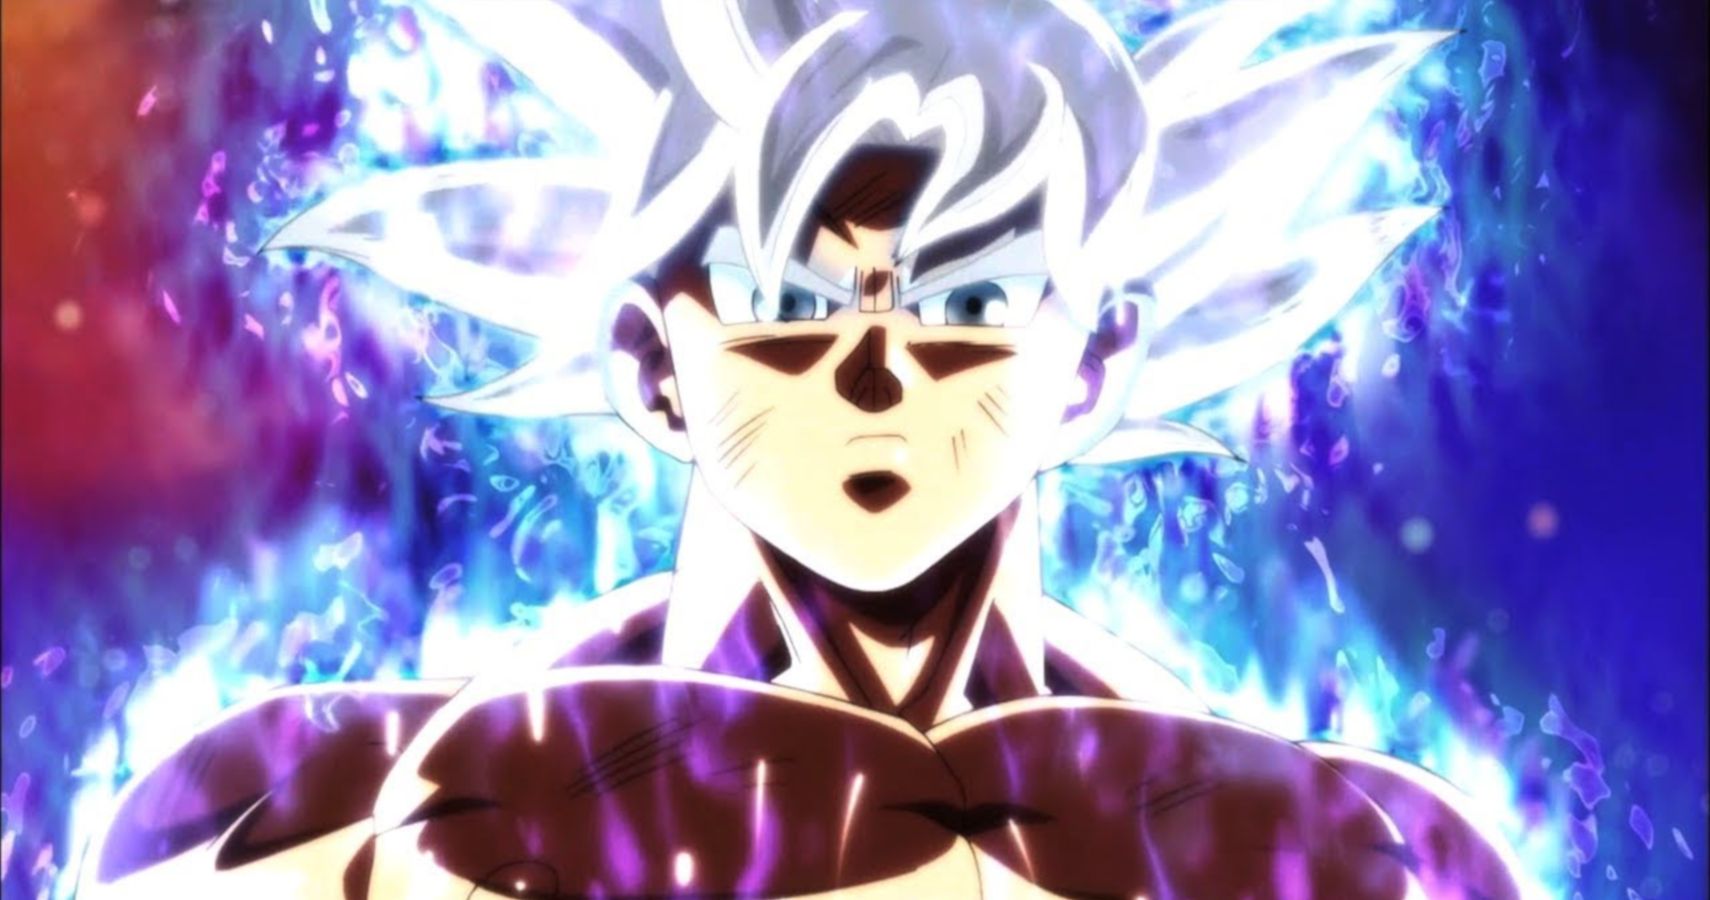 Does Goku S Ultra Instinct Form Make Him Unkillable